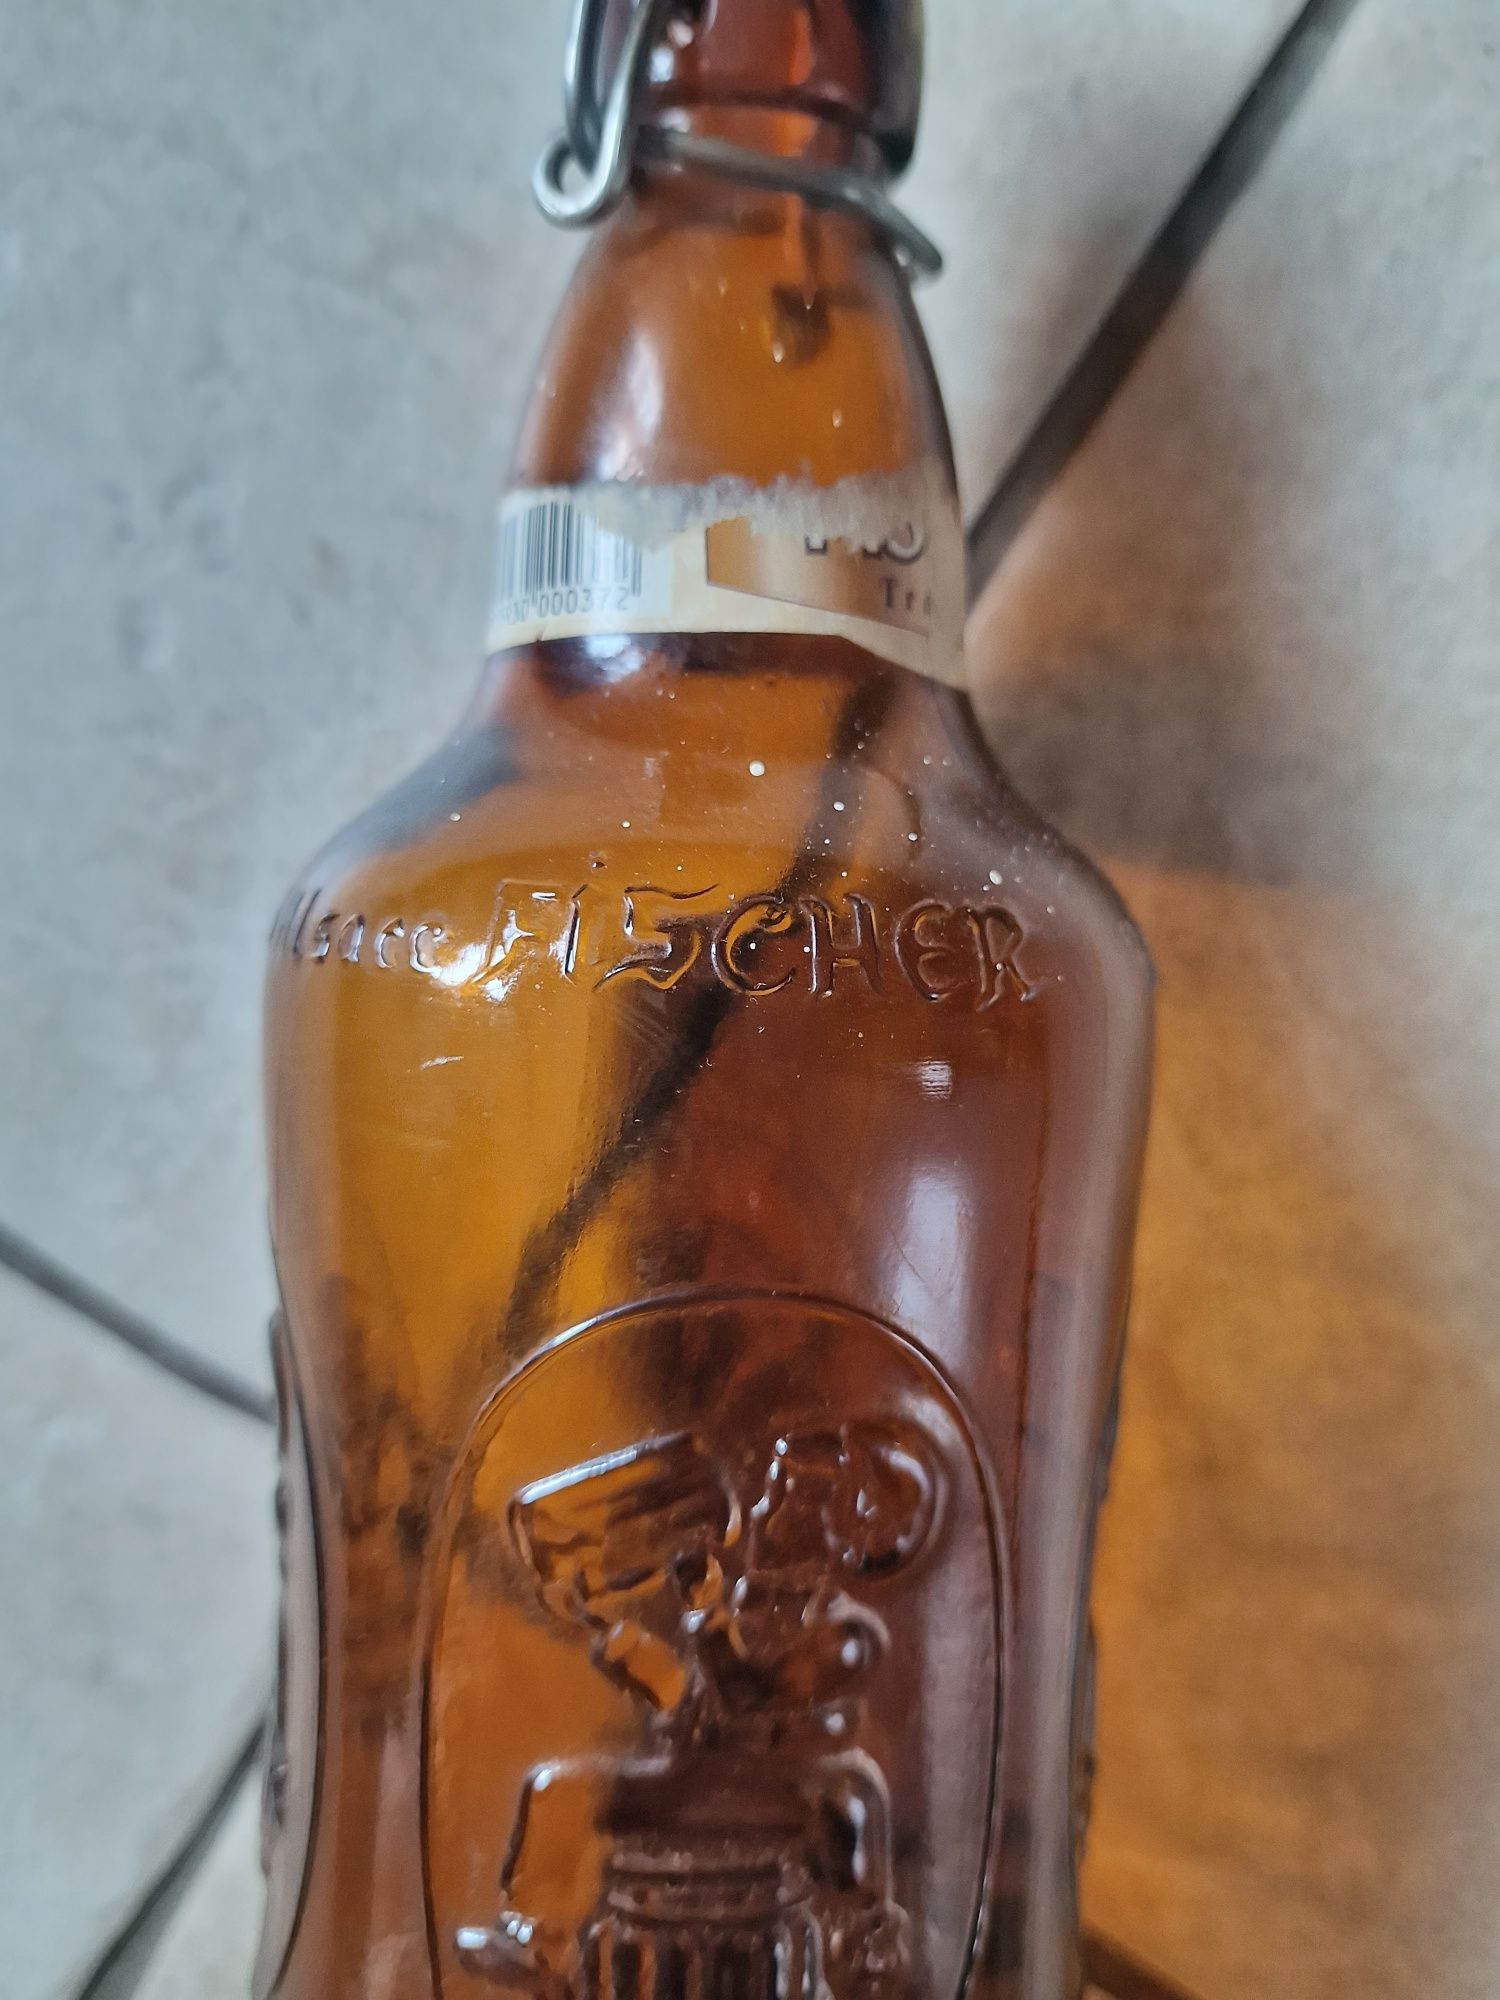 Butelka vintage FischerBieres cena 15zl